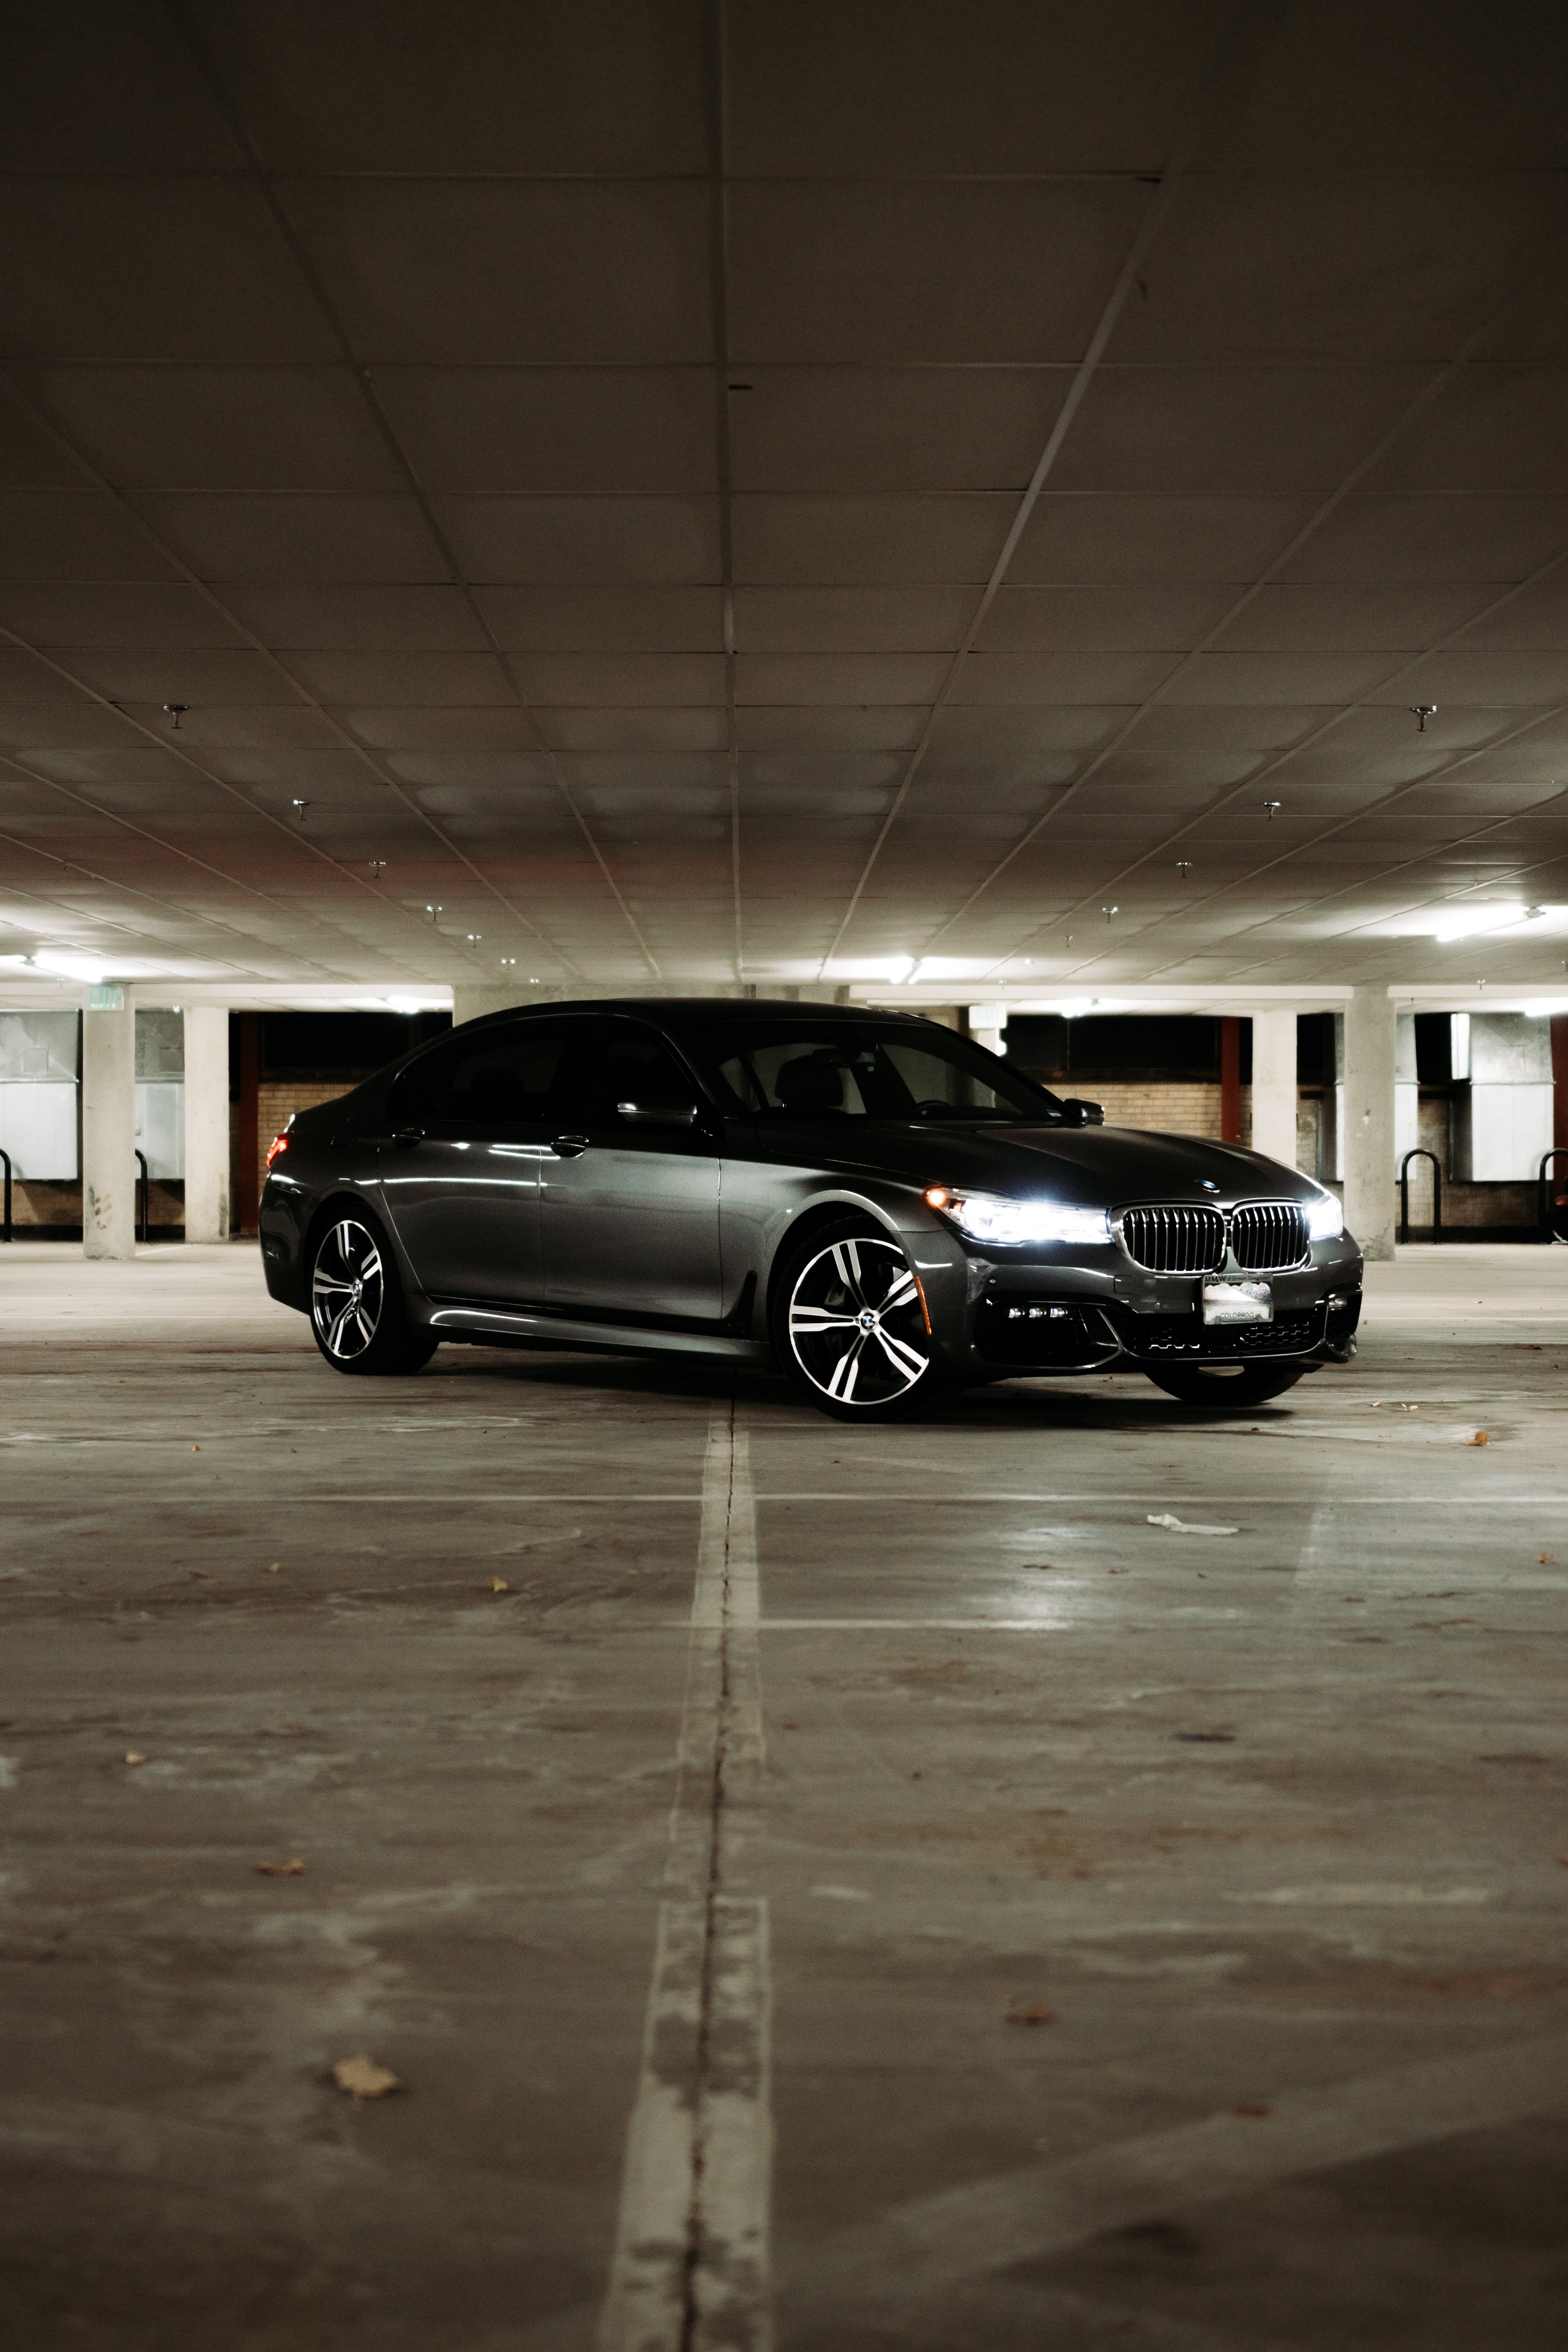 Black BMW | Source: Unplash / Jakob Rosen